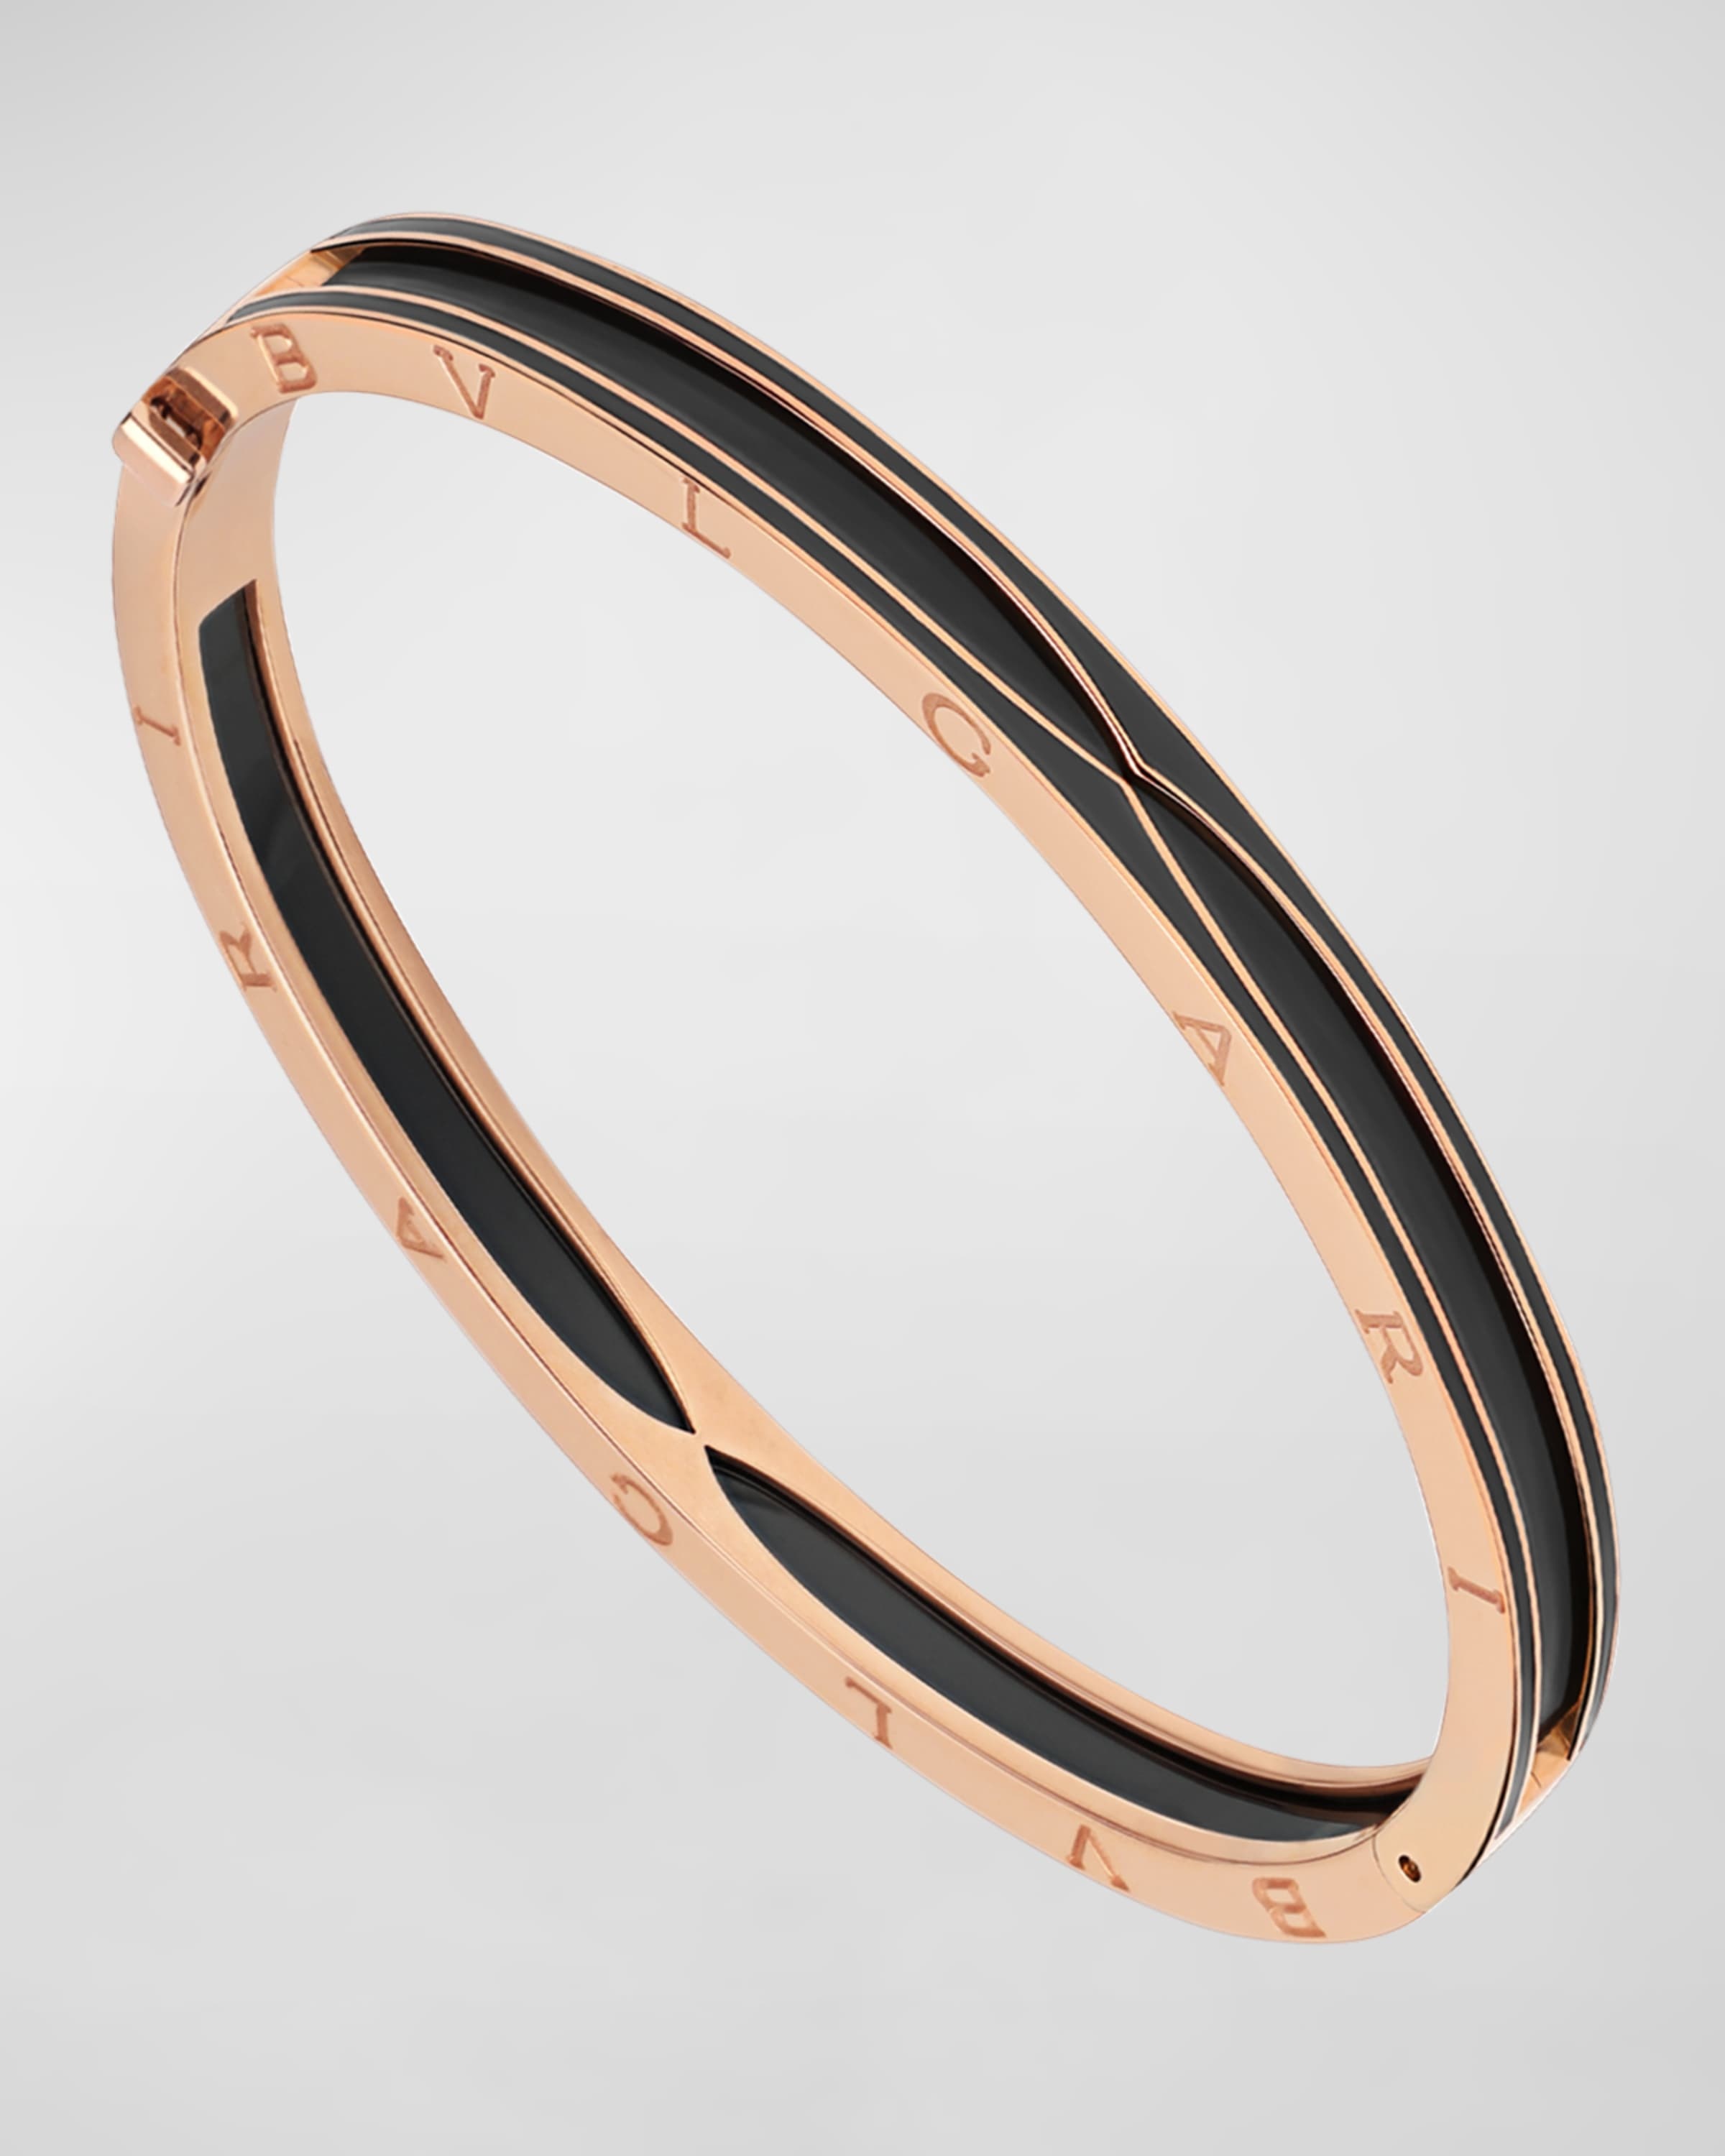 B.Zero1 Rose Gold Bracelet with Matte Black Ceramic Edge, Size XL - 1